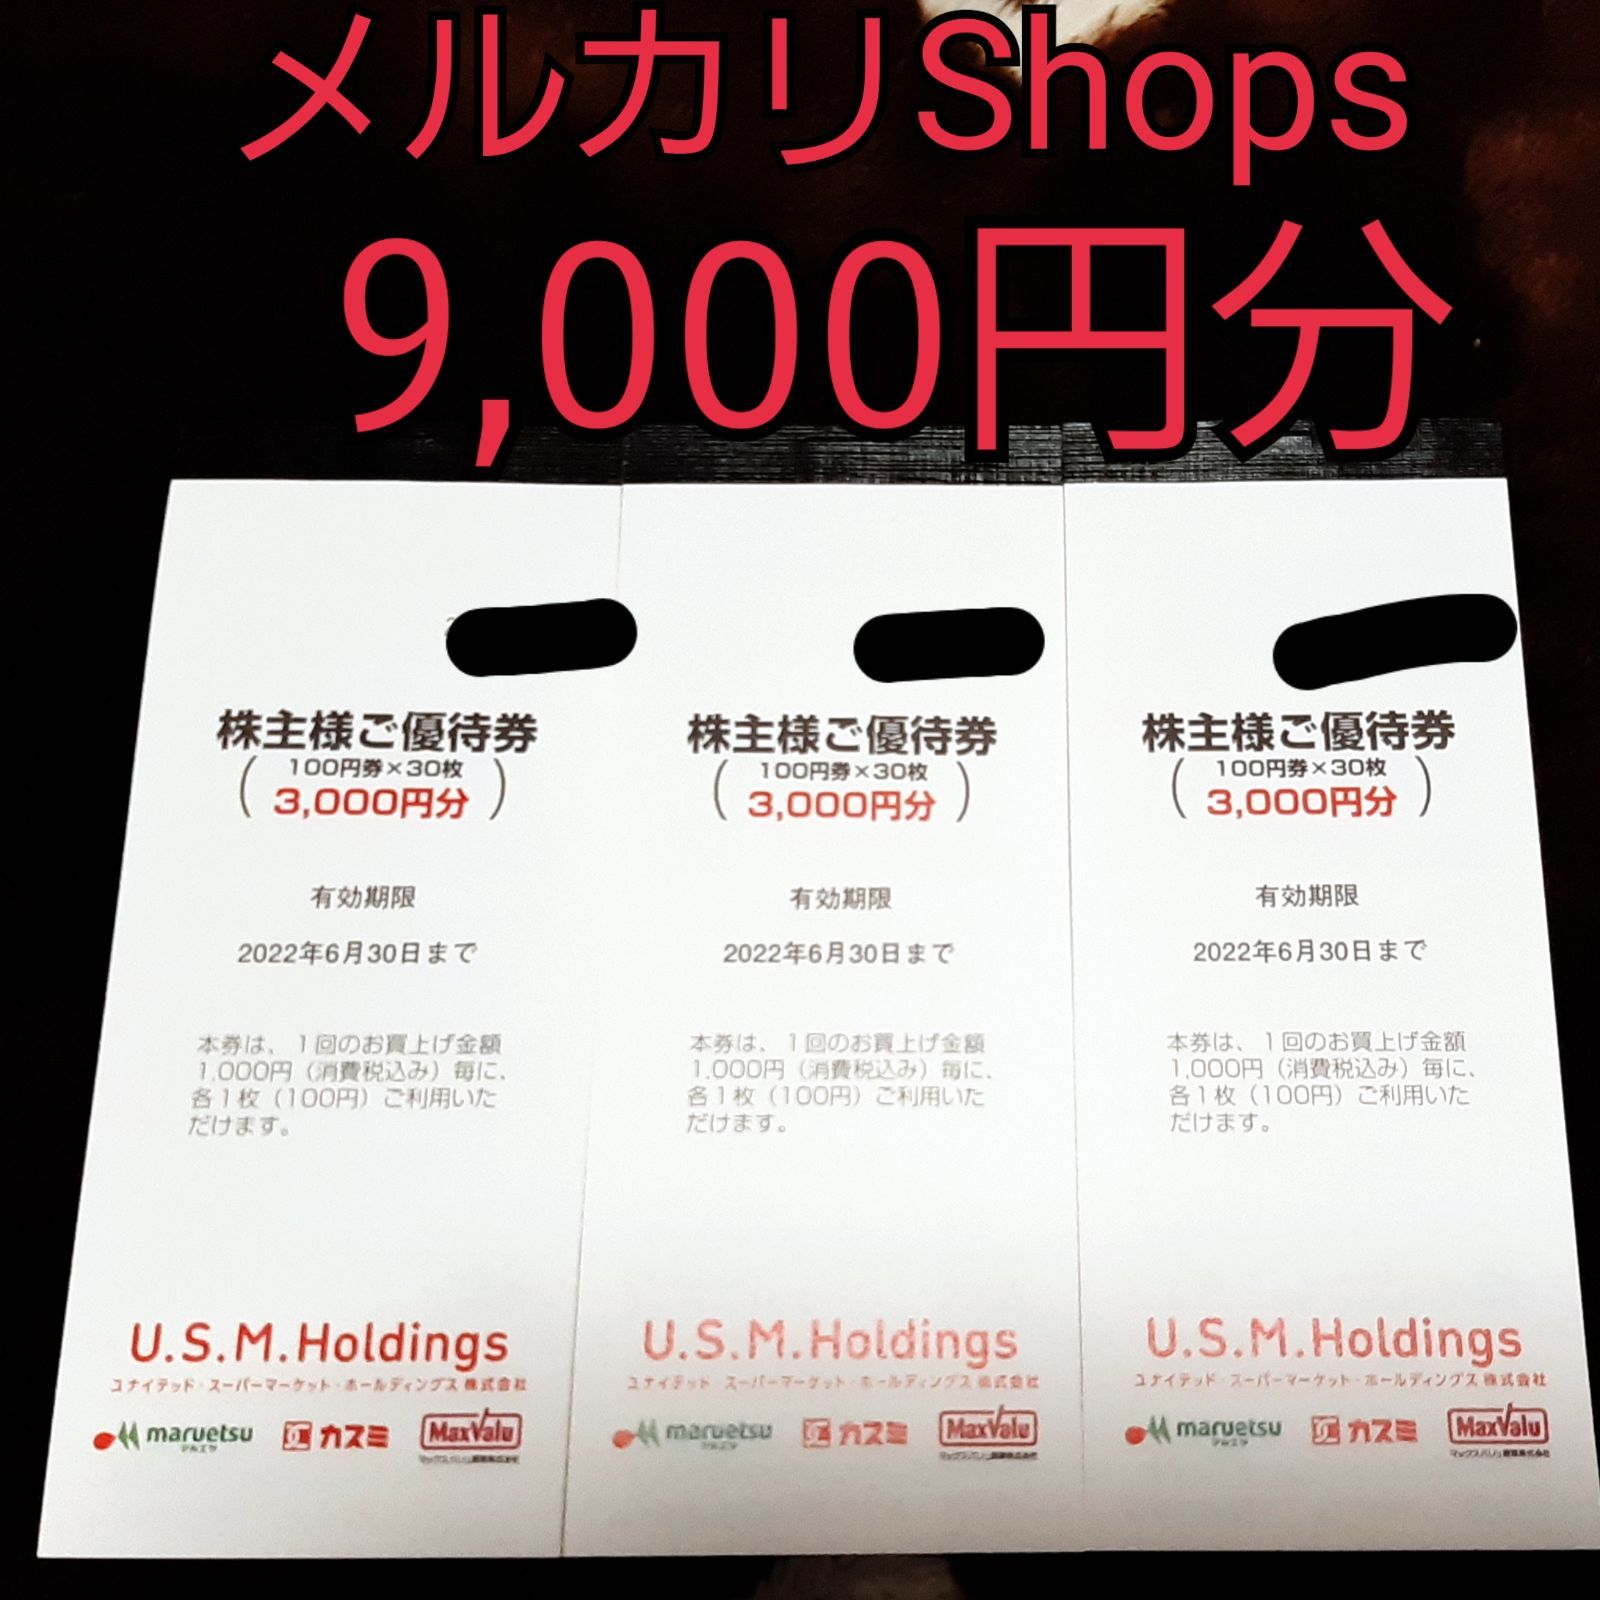 USMH 株主優待 9,000円分 - Yutaiショップ - メルカリ